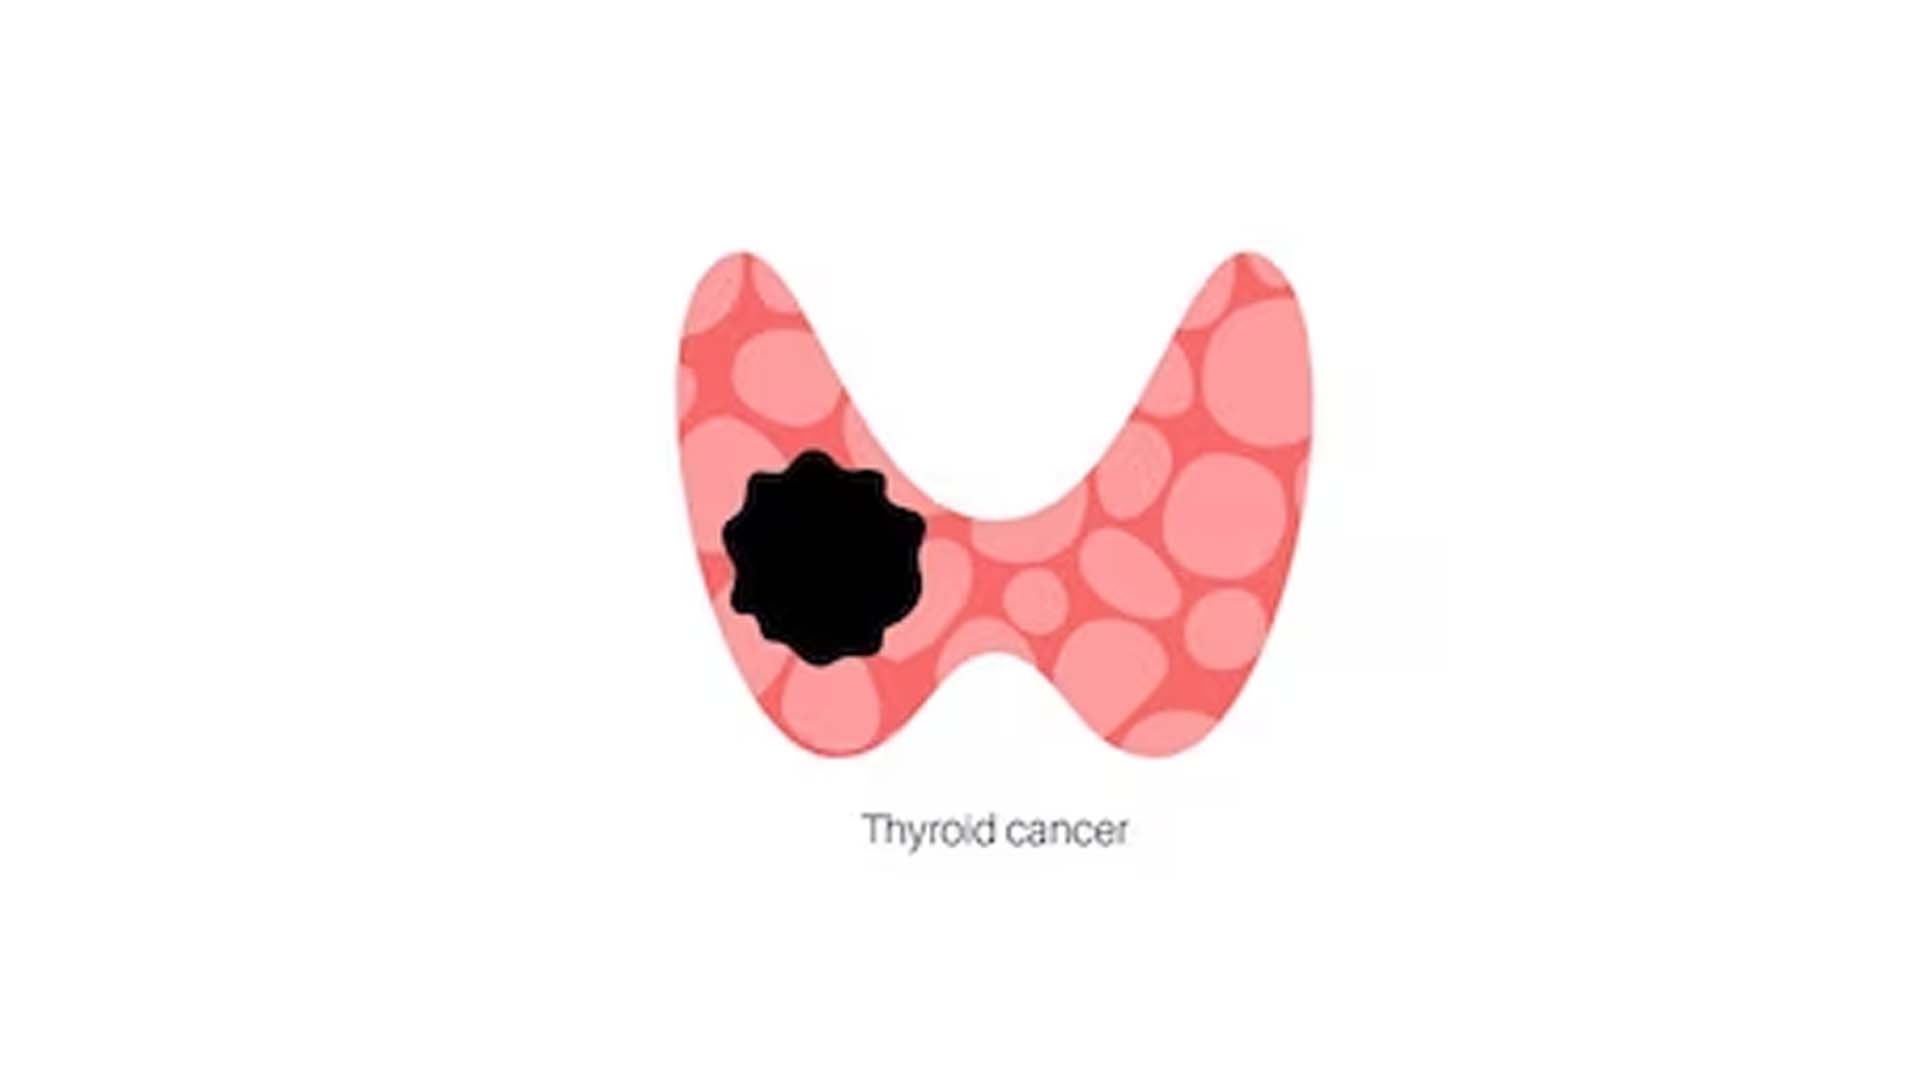 Thyroid Cancer illustration